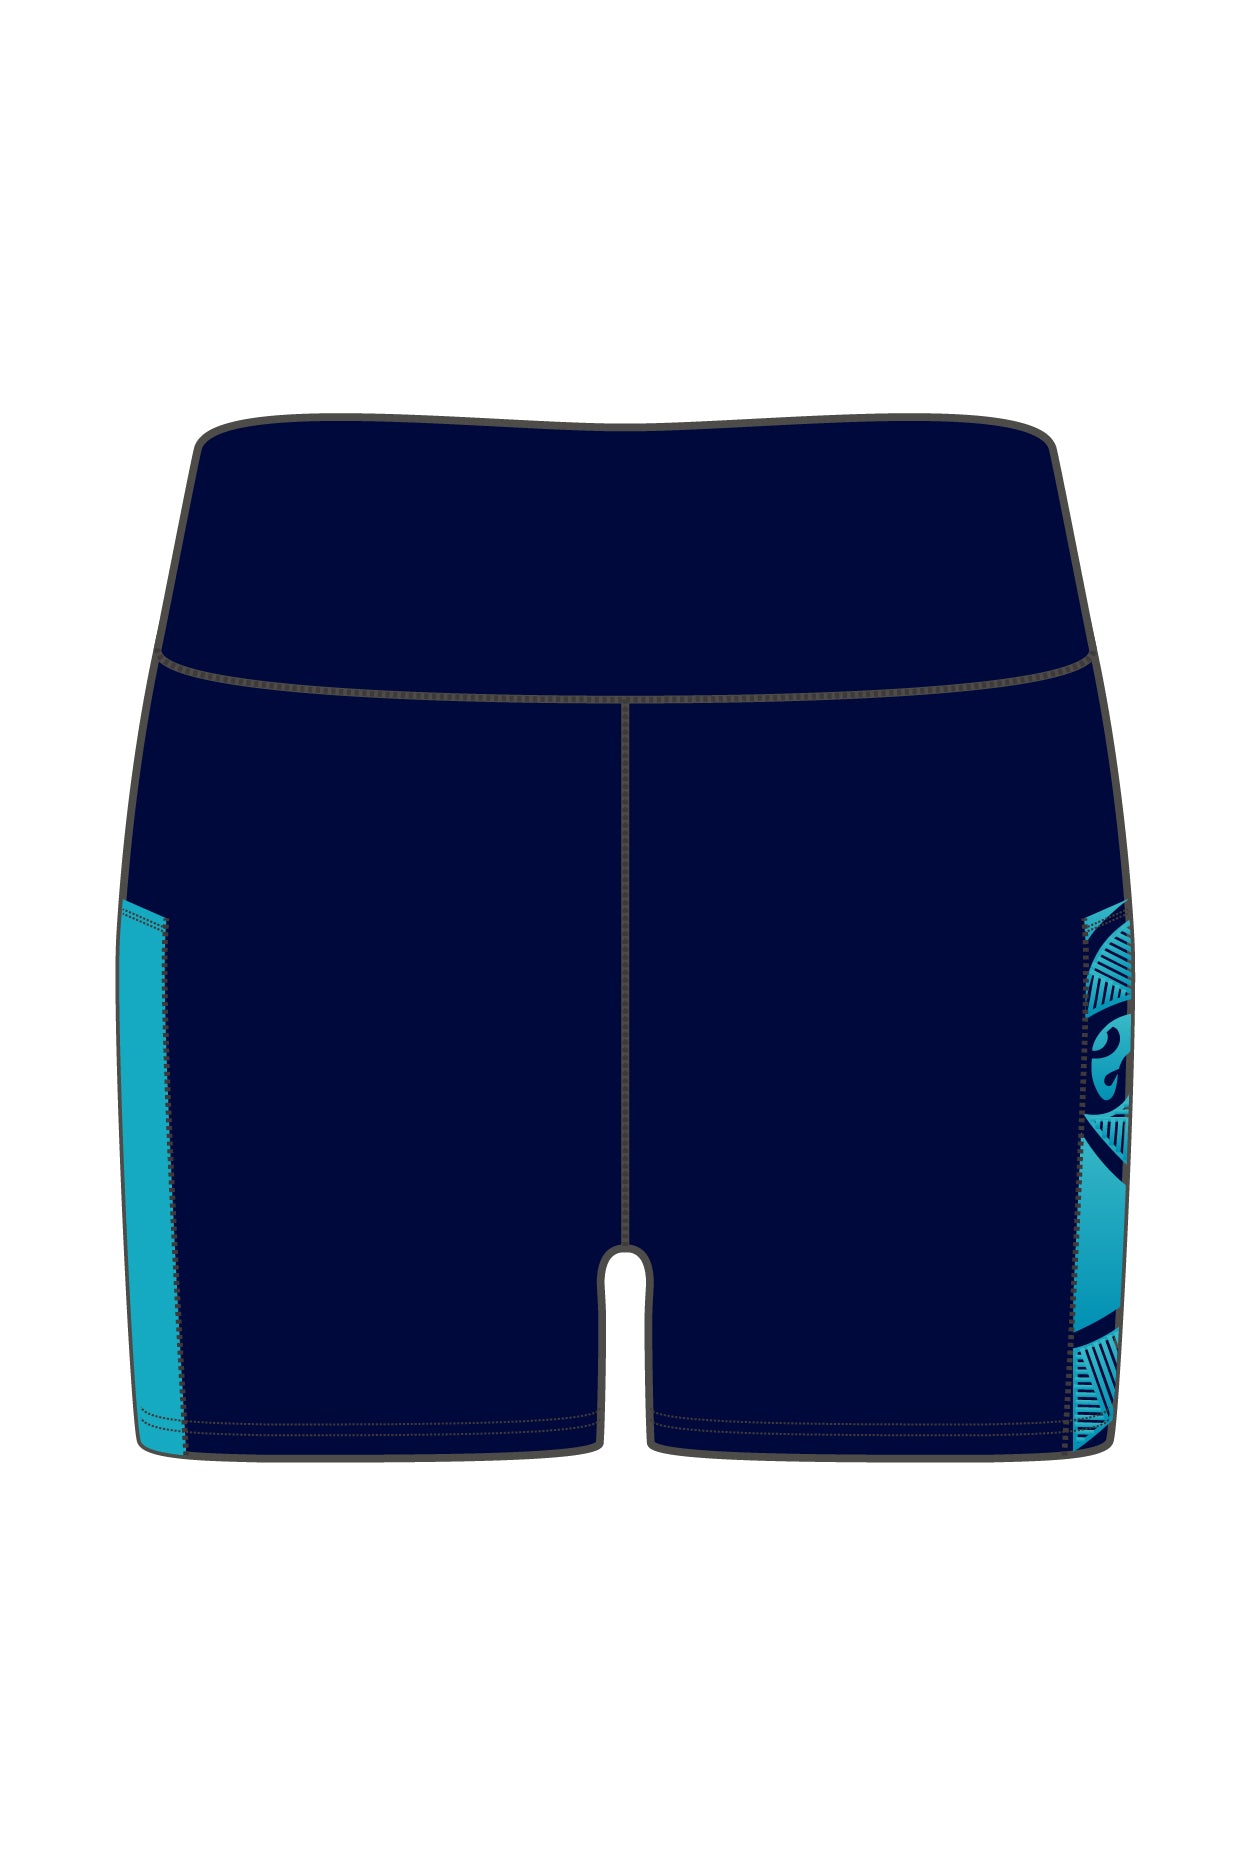 Townsville Tri Club Mid-Thigh Shorts